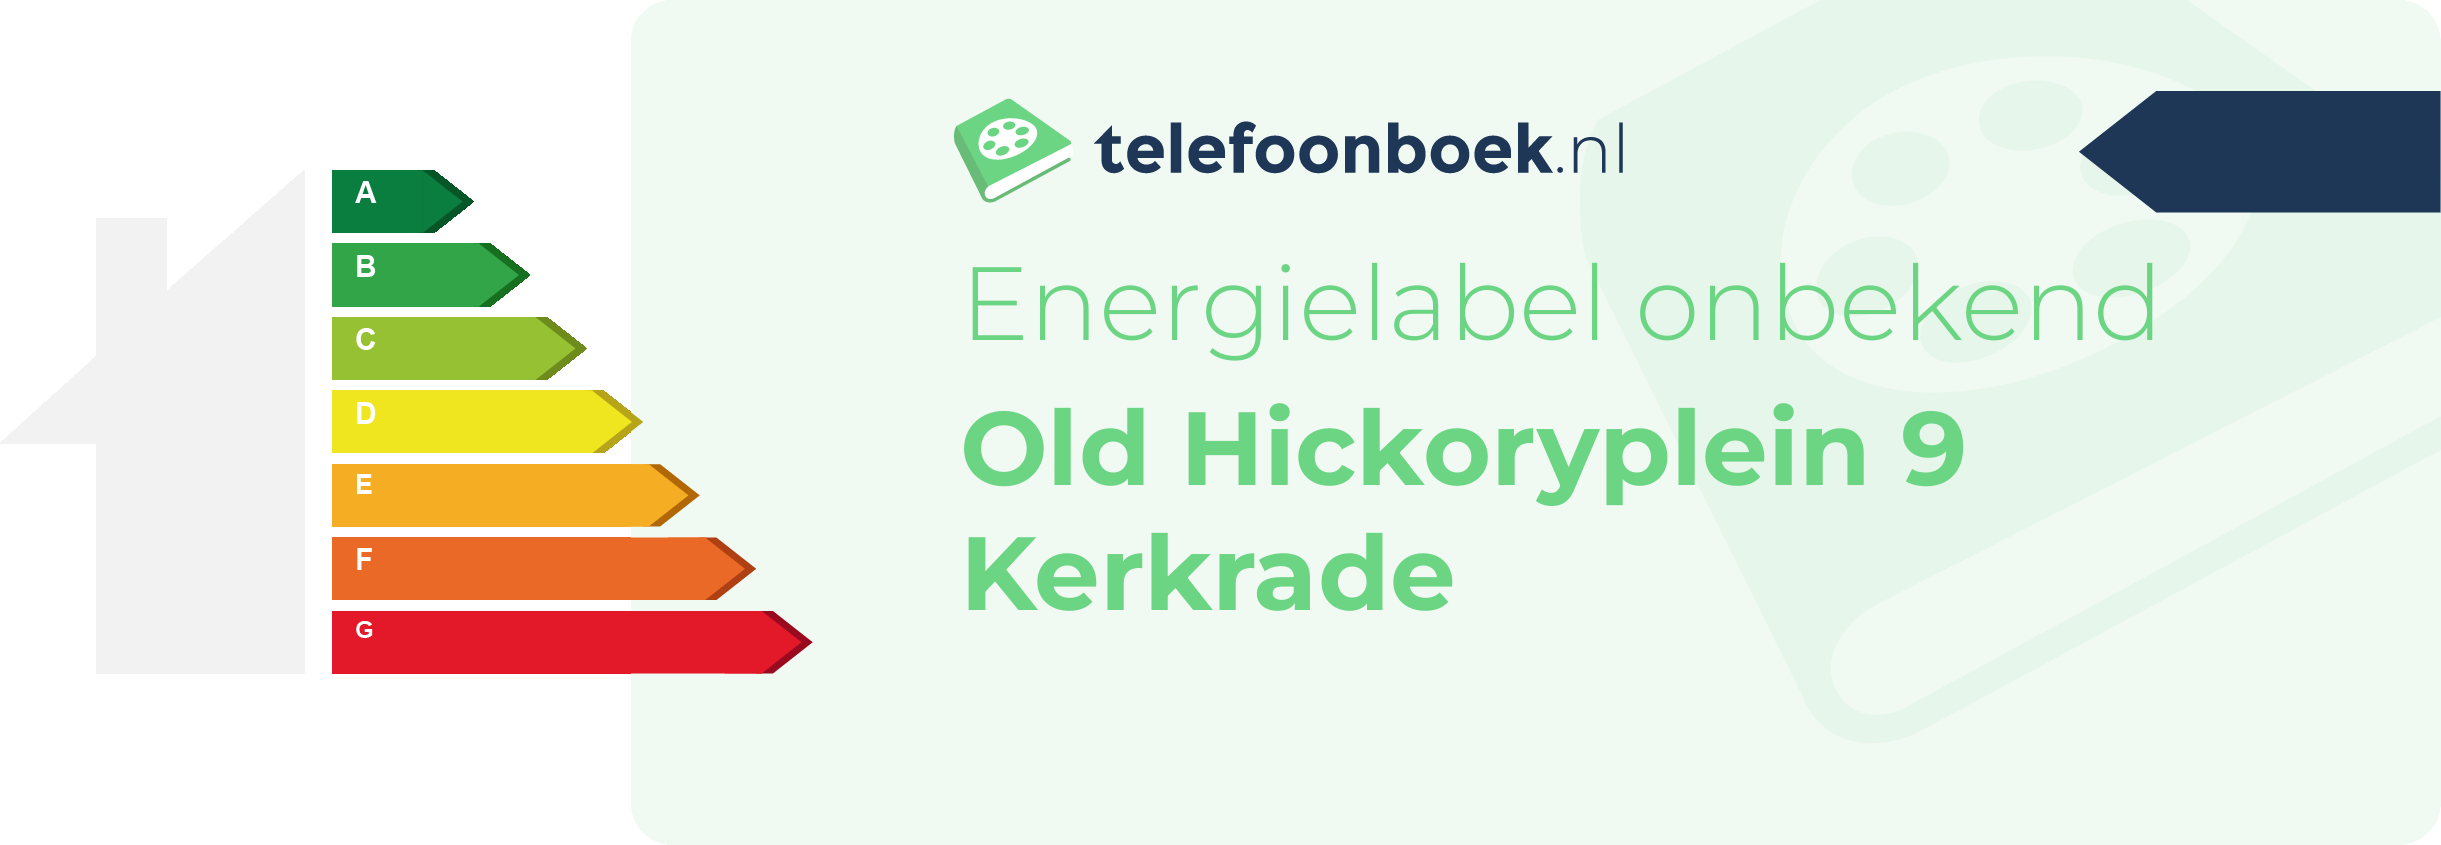 Energielabel Old Hickoryplein 9 Kerkrade